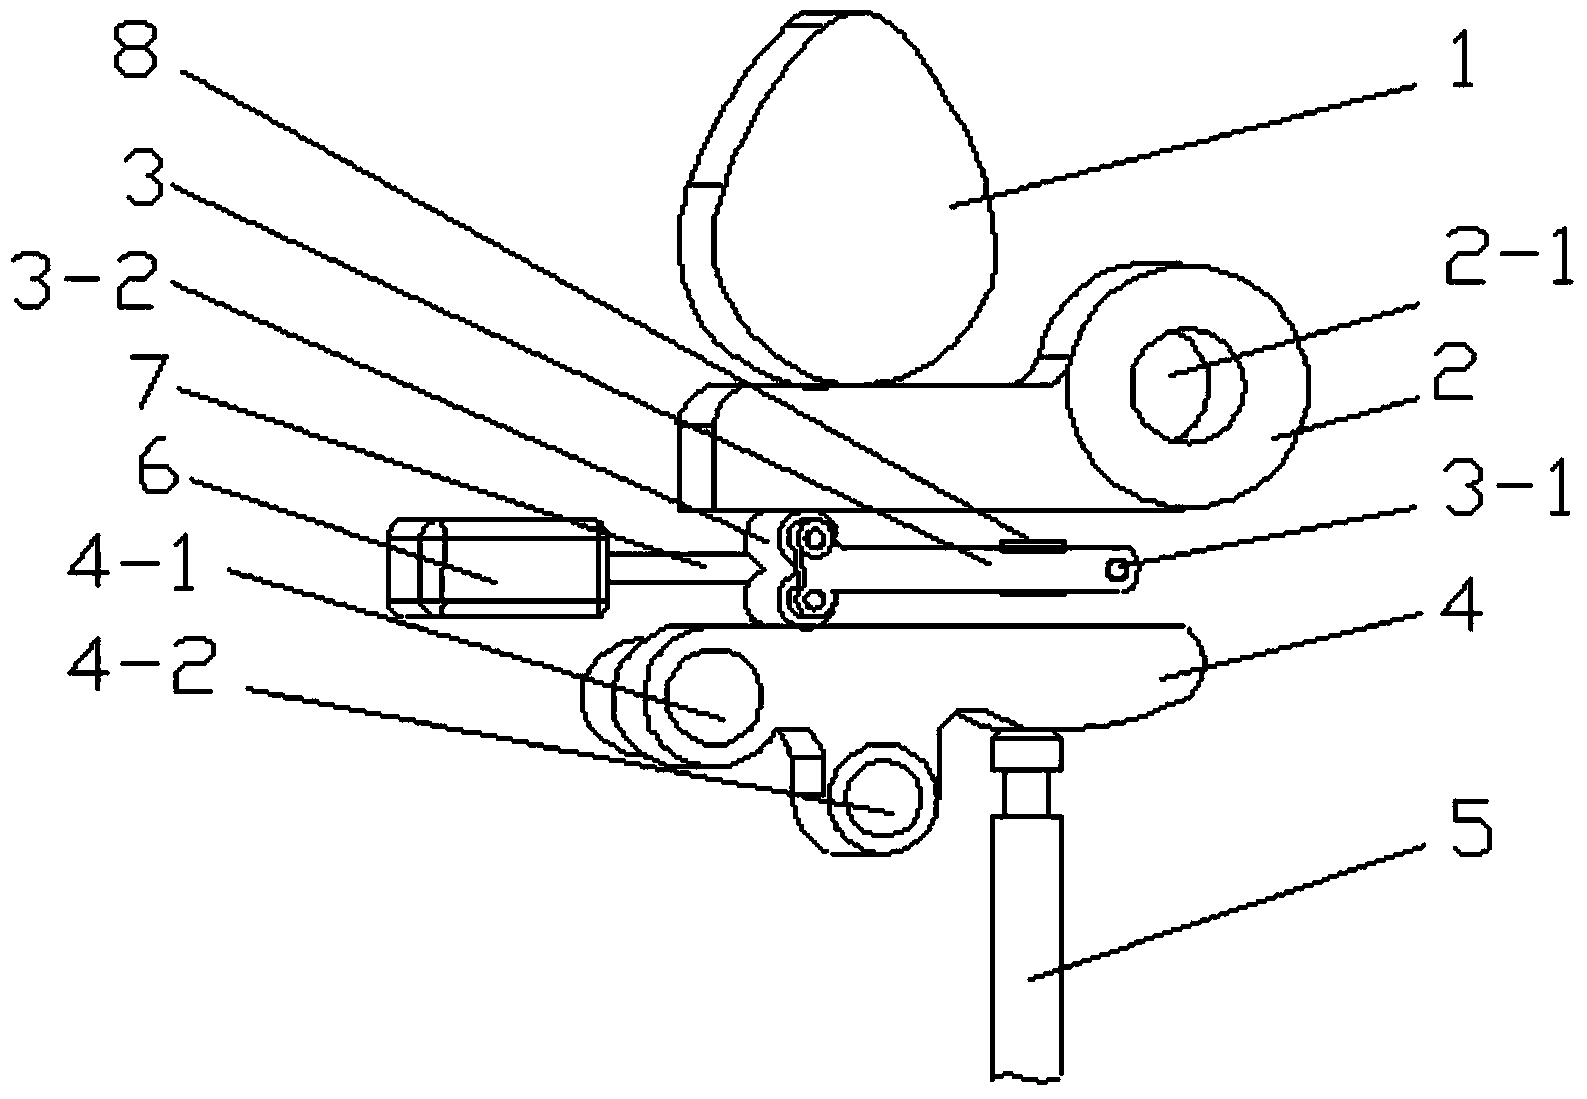 Variable valve lift mechanism